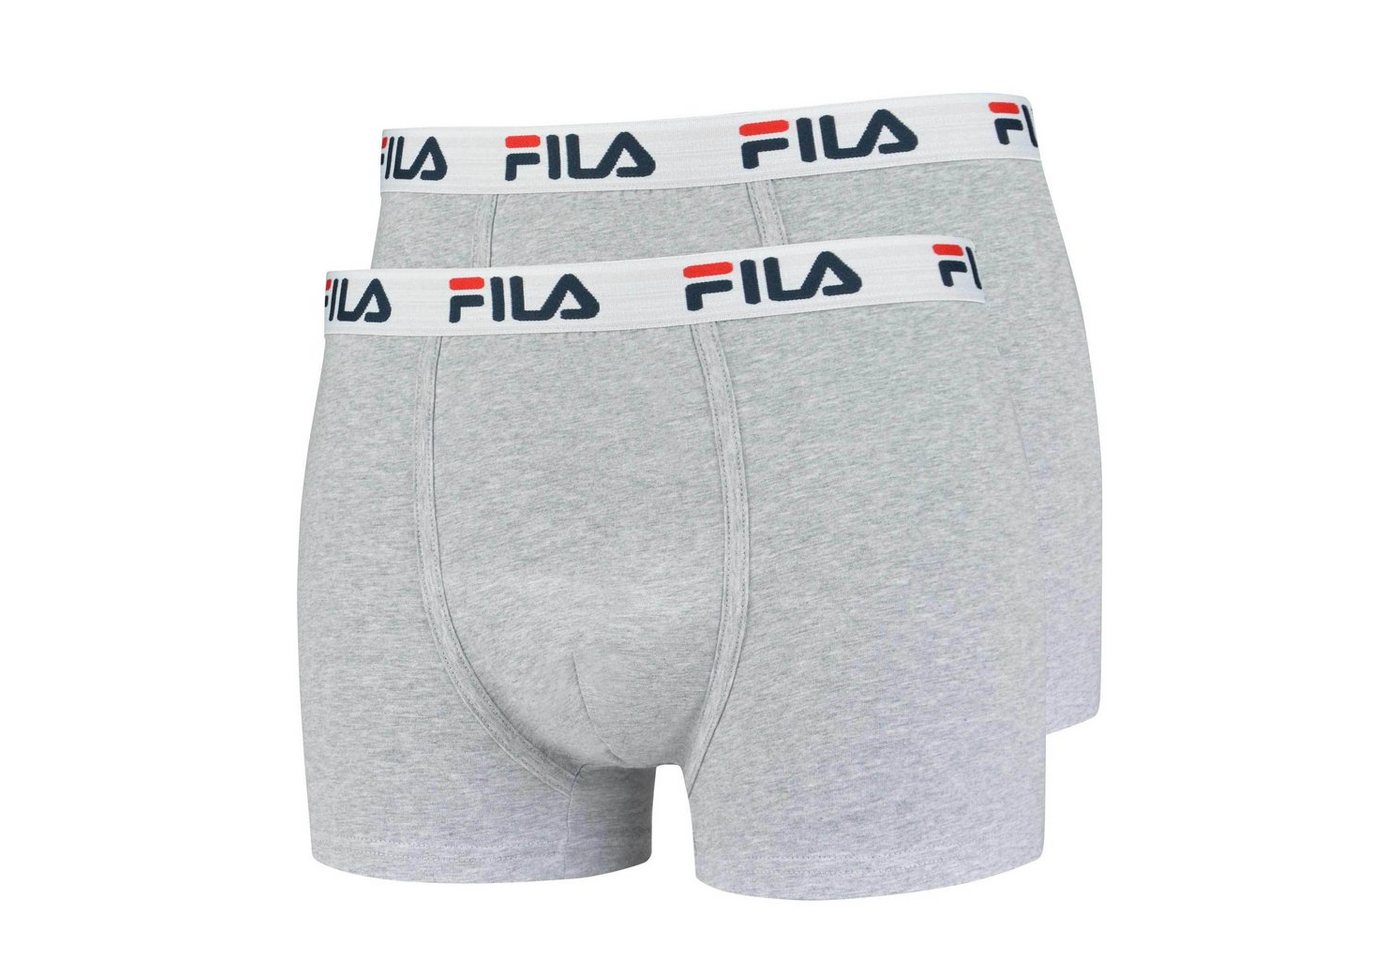 Fila Boxer Herren Boxer Shorts, 2er Pack - Baumwolle von Fila